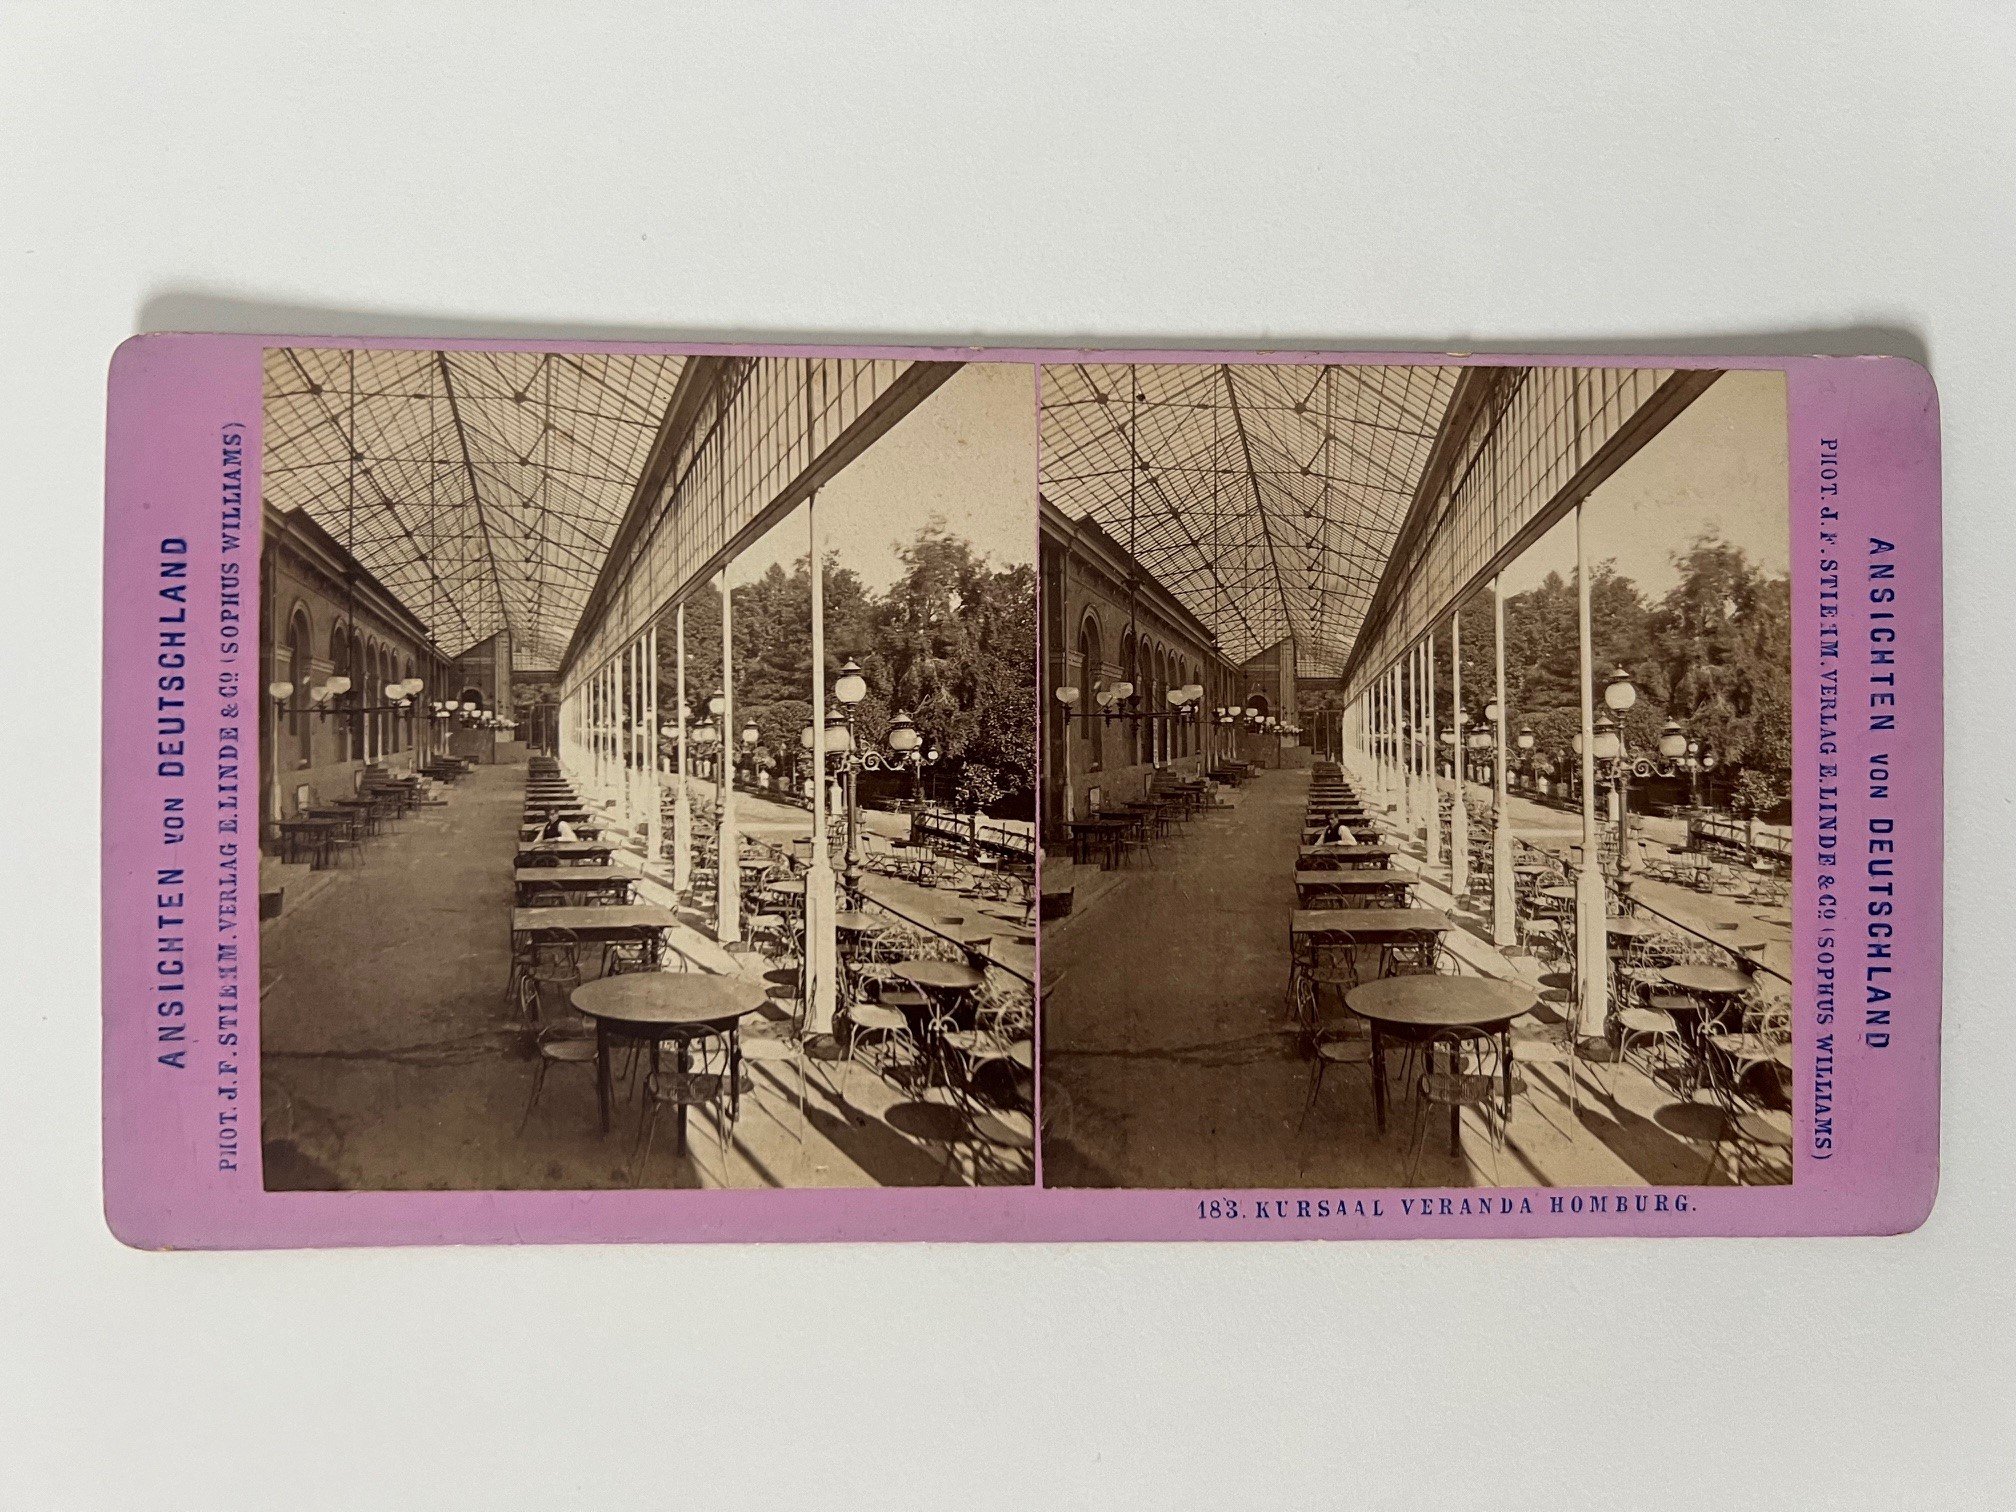 Stereobild, Johann Friedrich Stiehm, Bad Homburg, Nr. 183, Kursaal Veranda, ca. 1880. (Taunus-Rhein-Main - Regionalgeschichtliche Sammlung Dr. Stefan Naas CC BY-NC-SA)